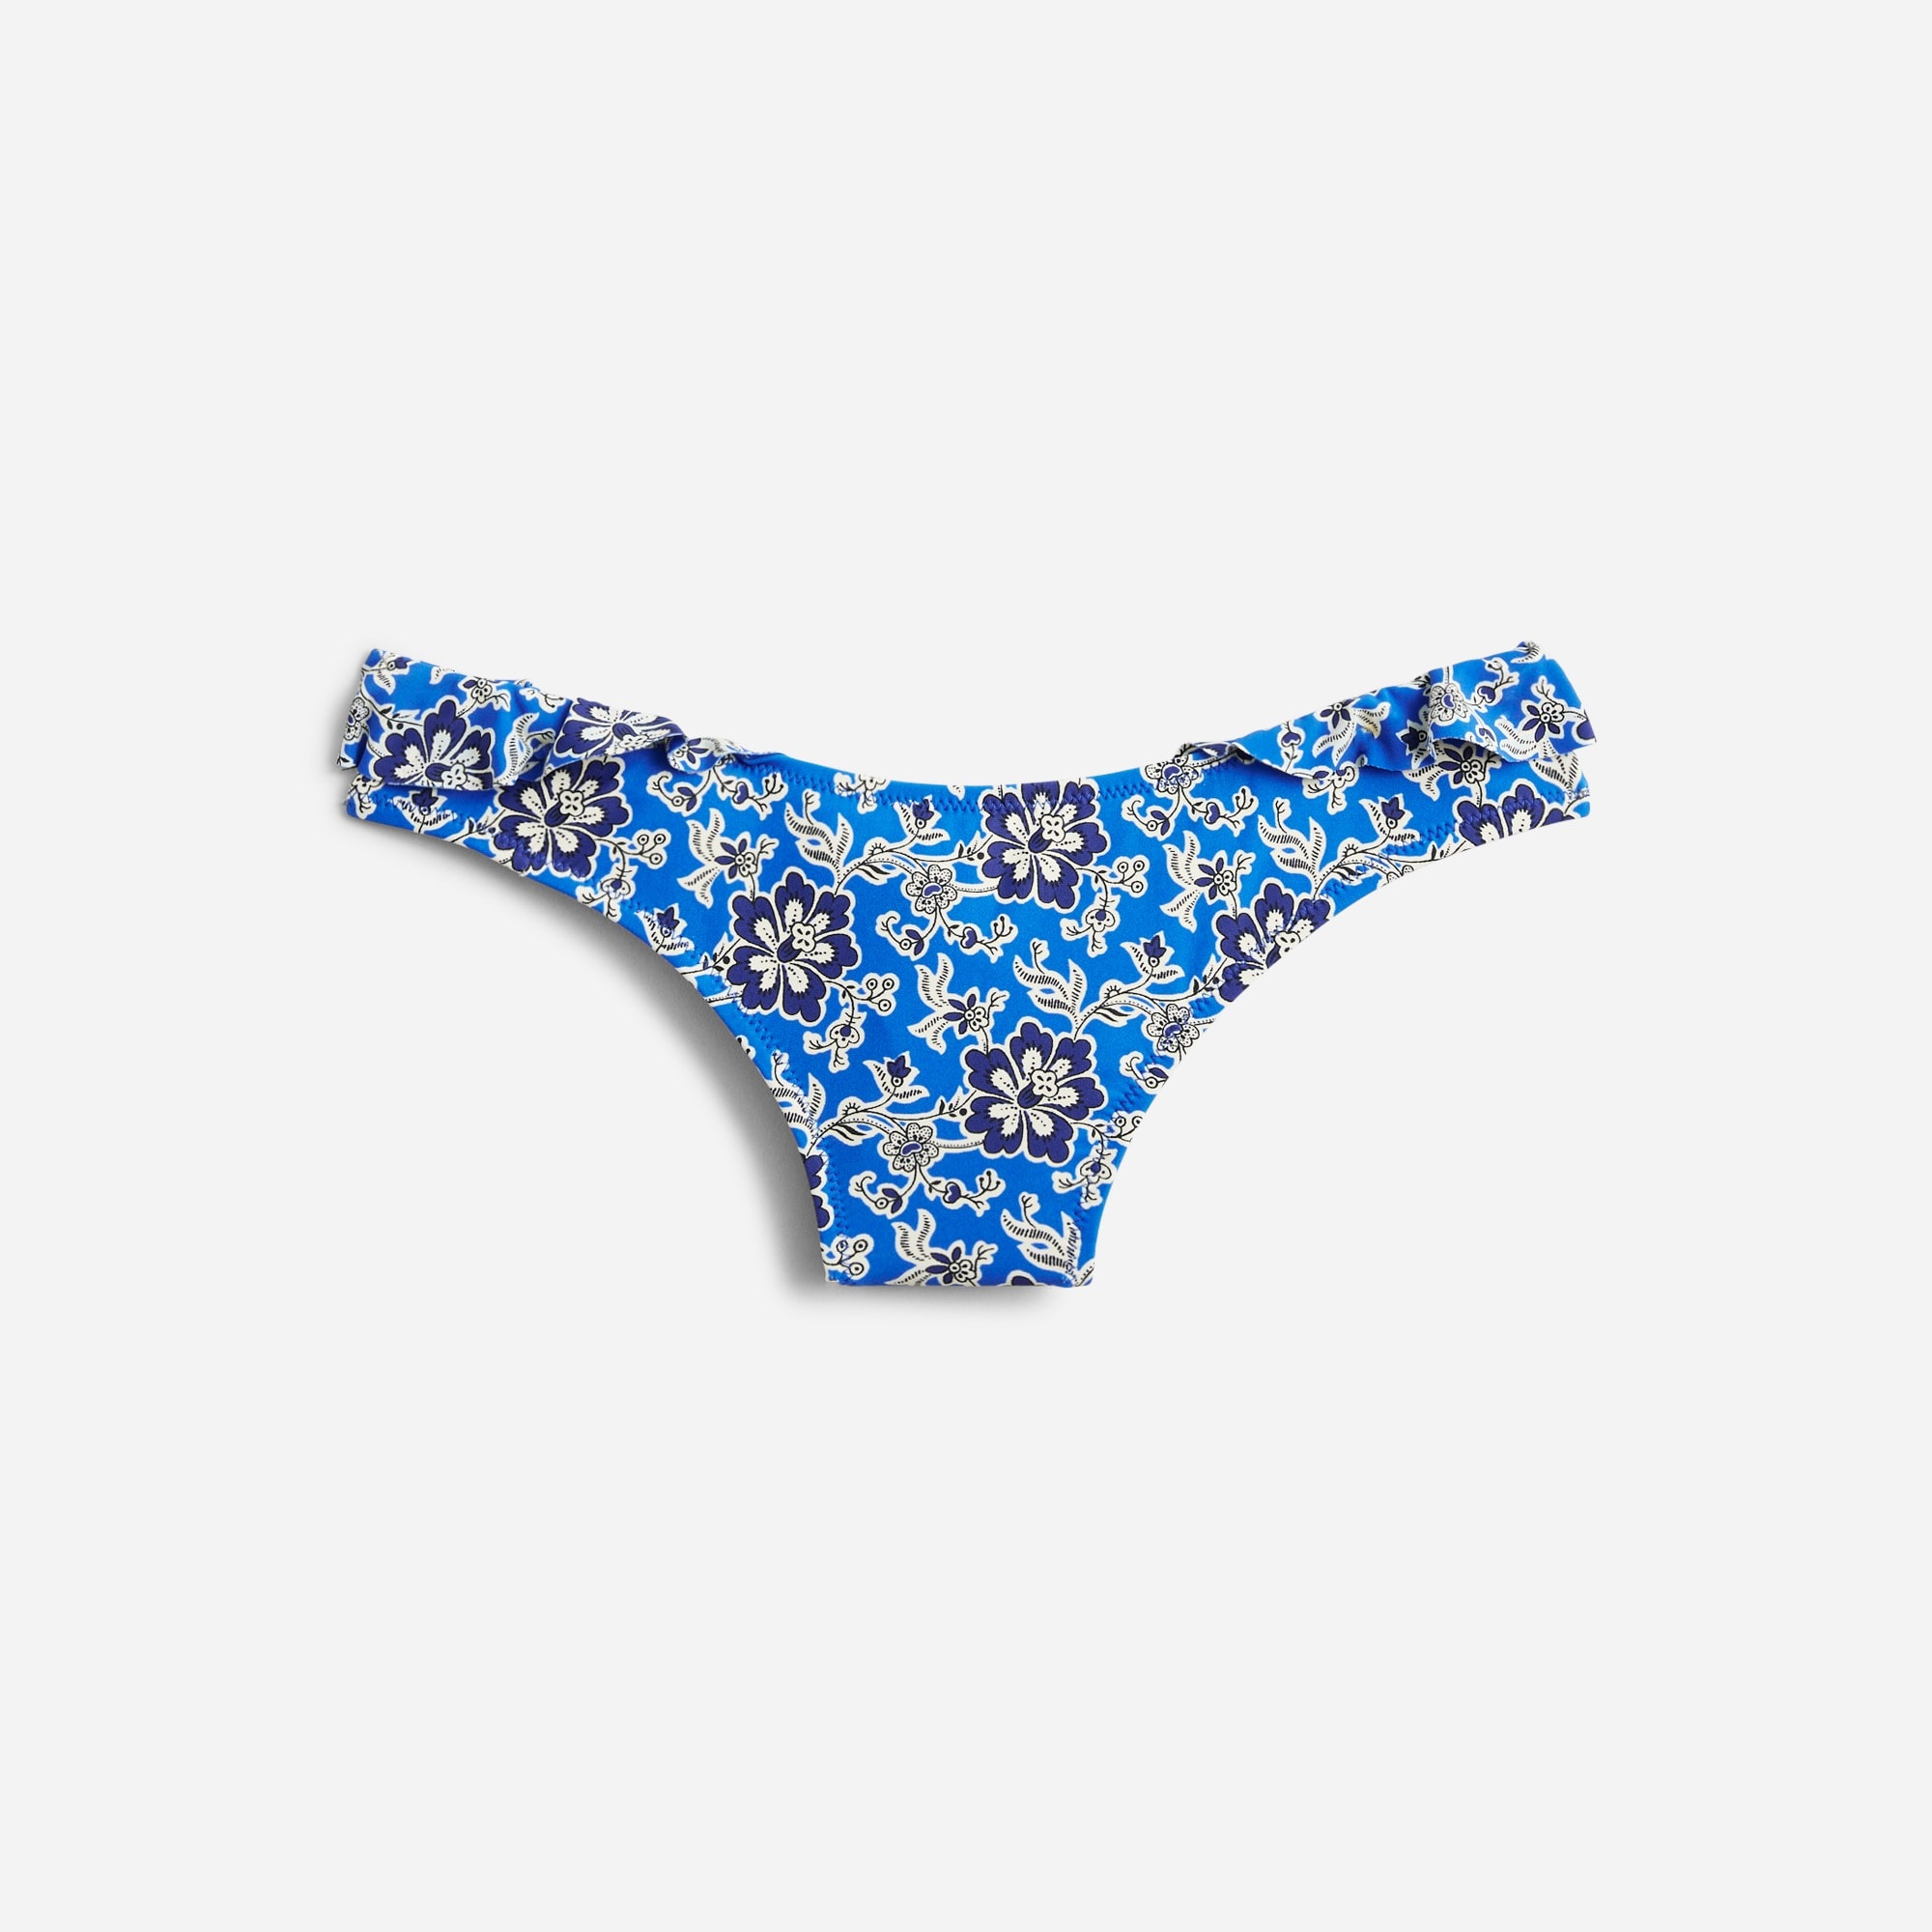  Ruffle bikini bottom in cobalt floral